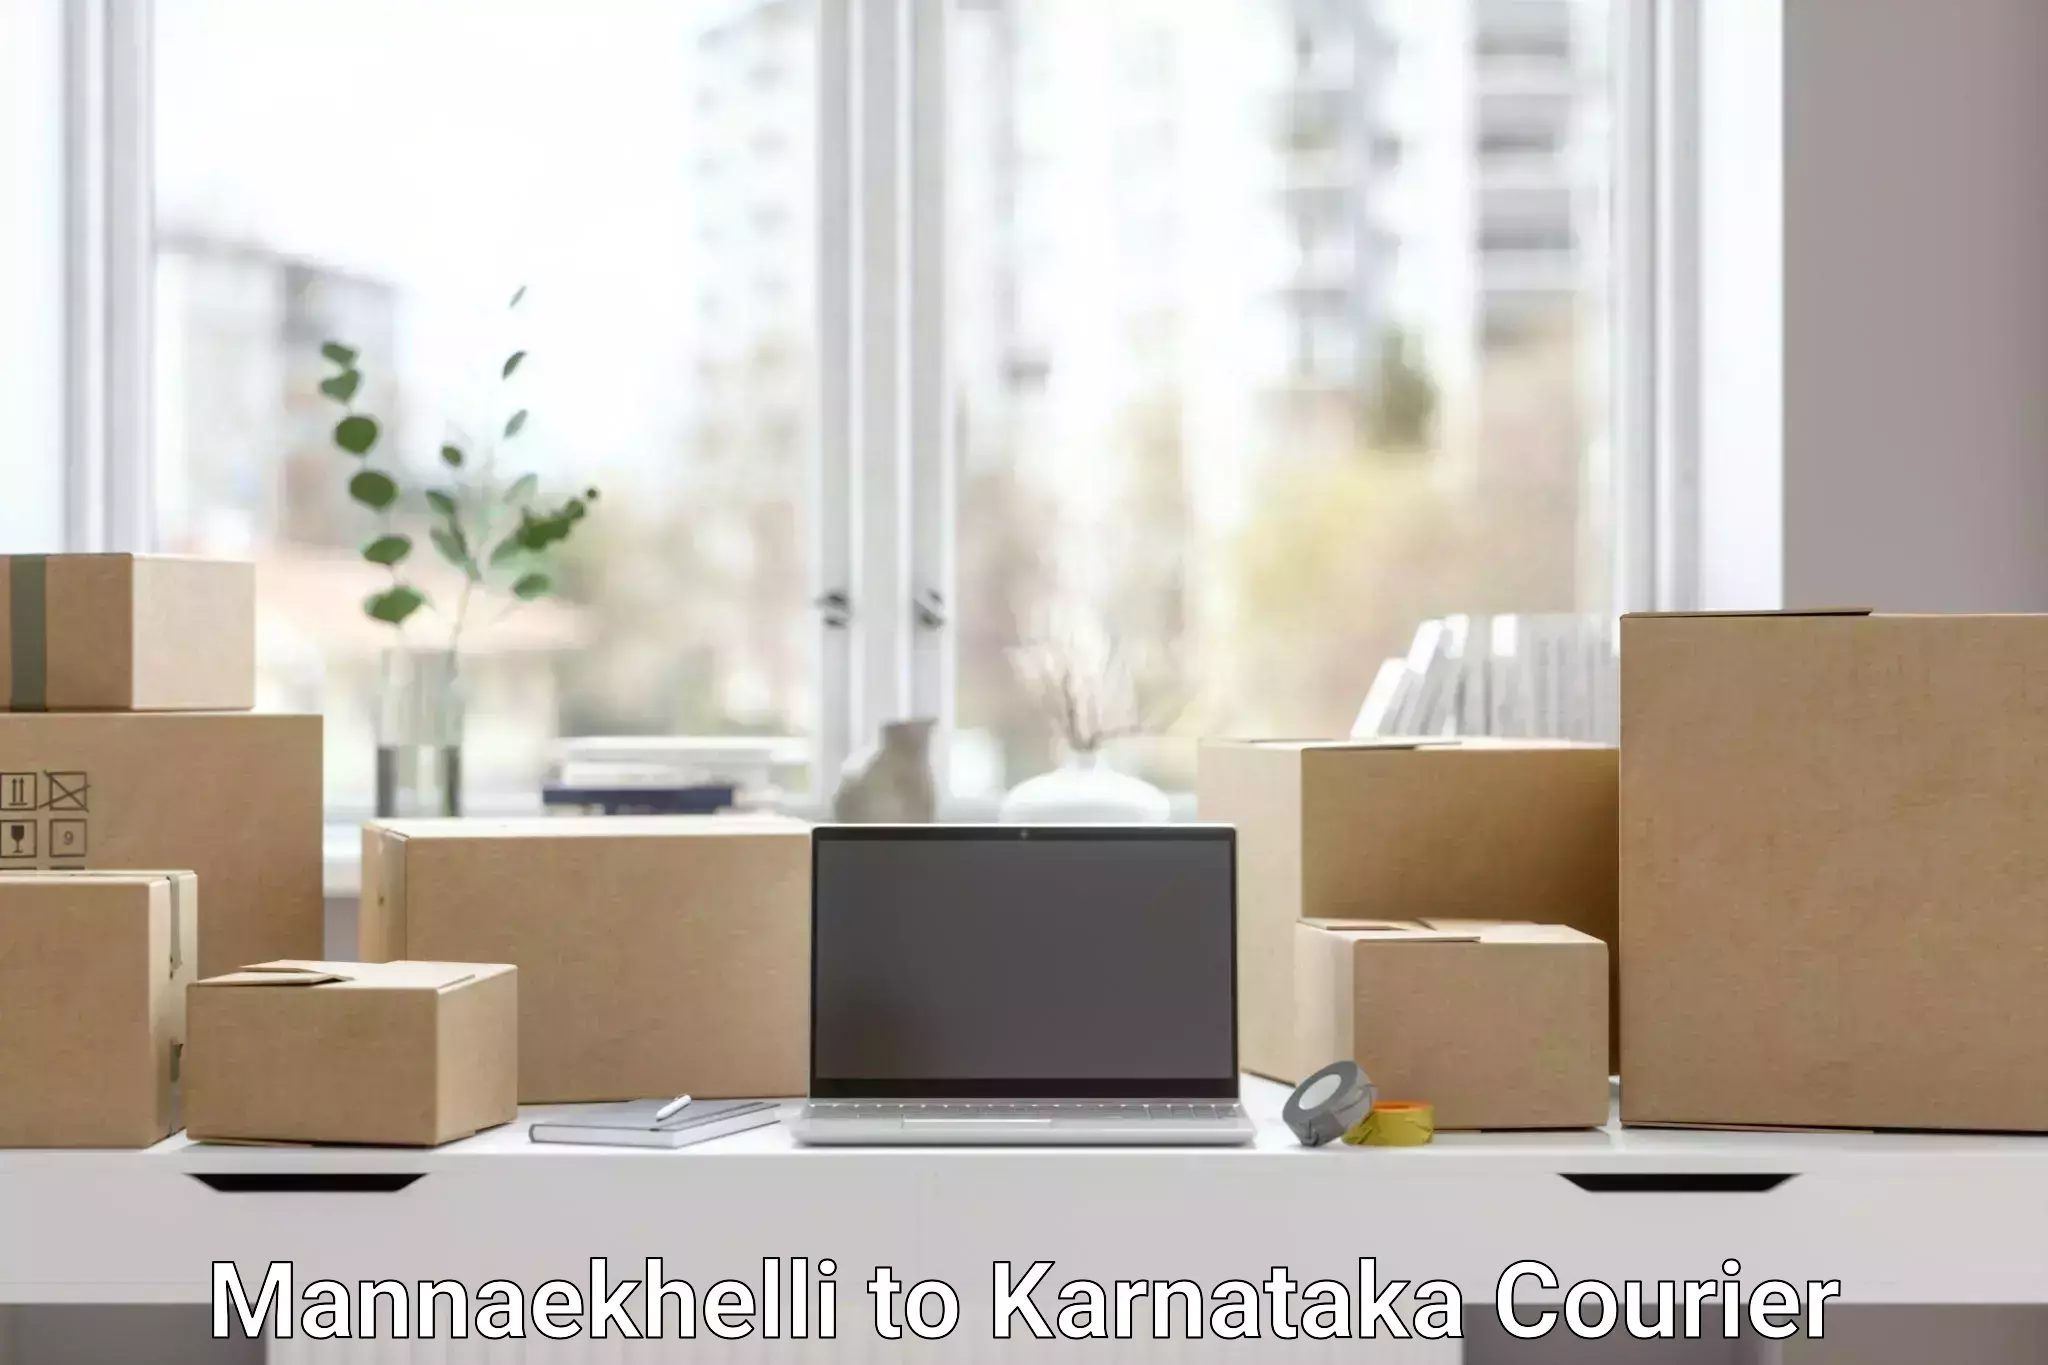 Supply chain delivery Mannaekhelli to Karnataka